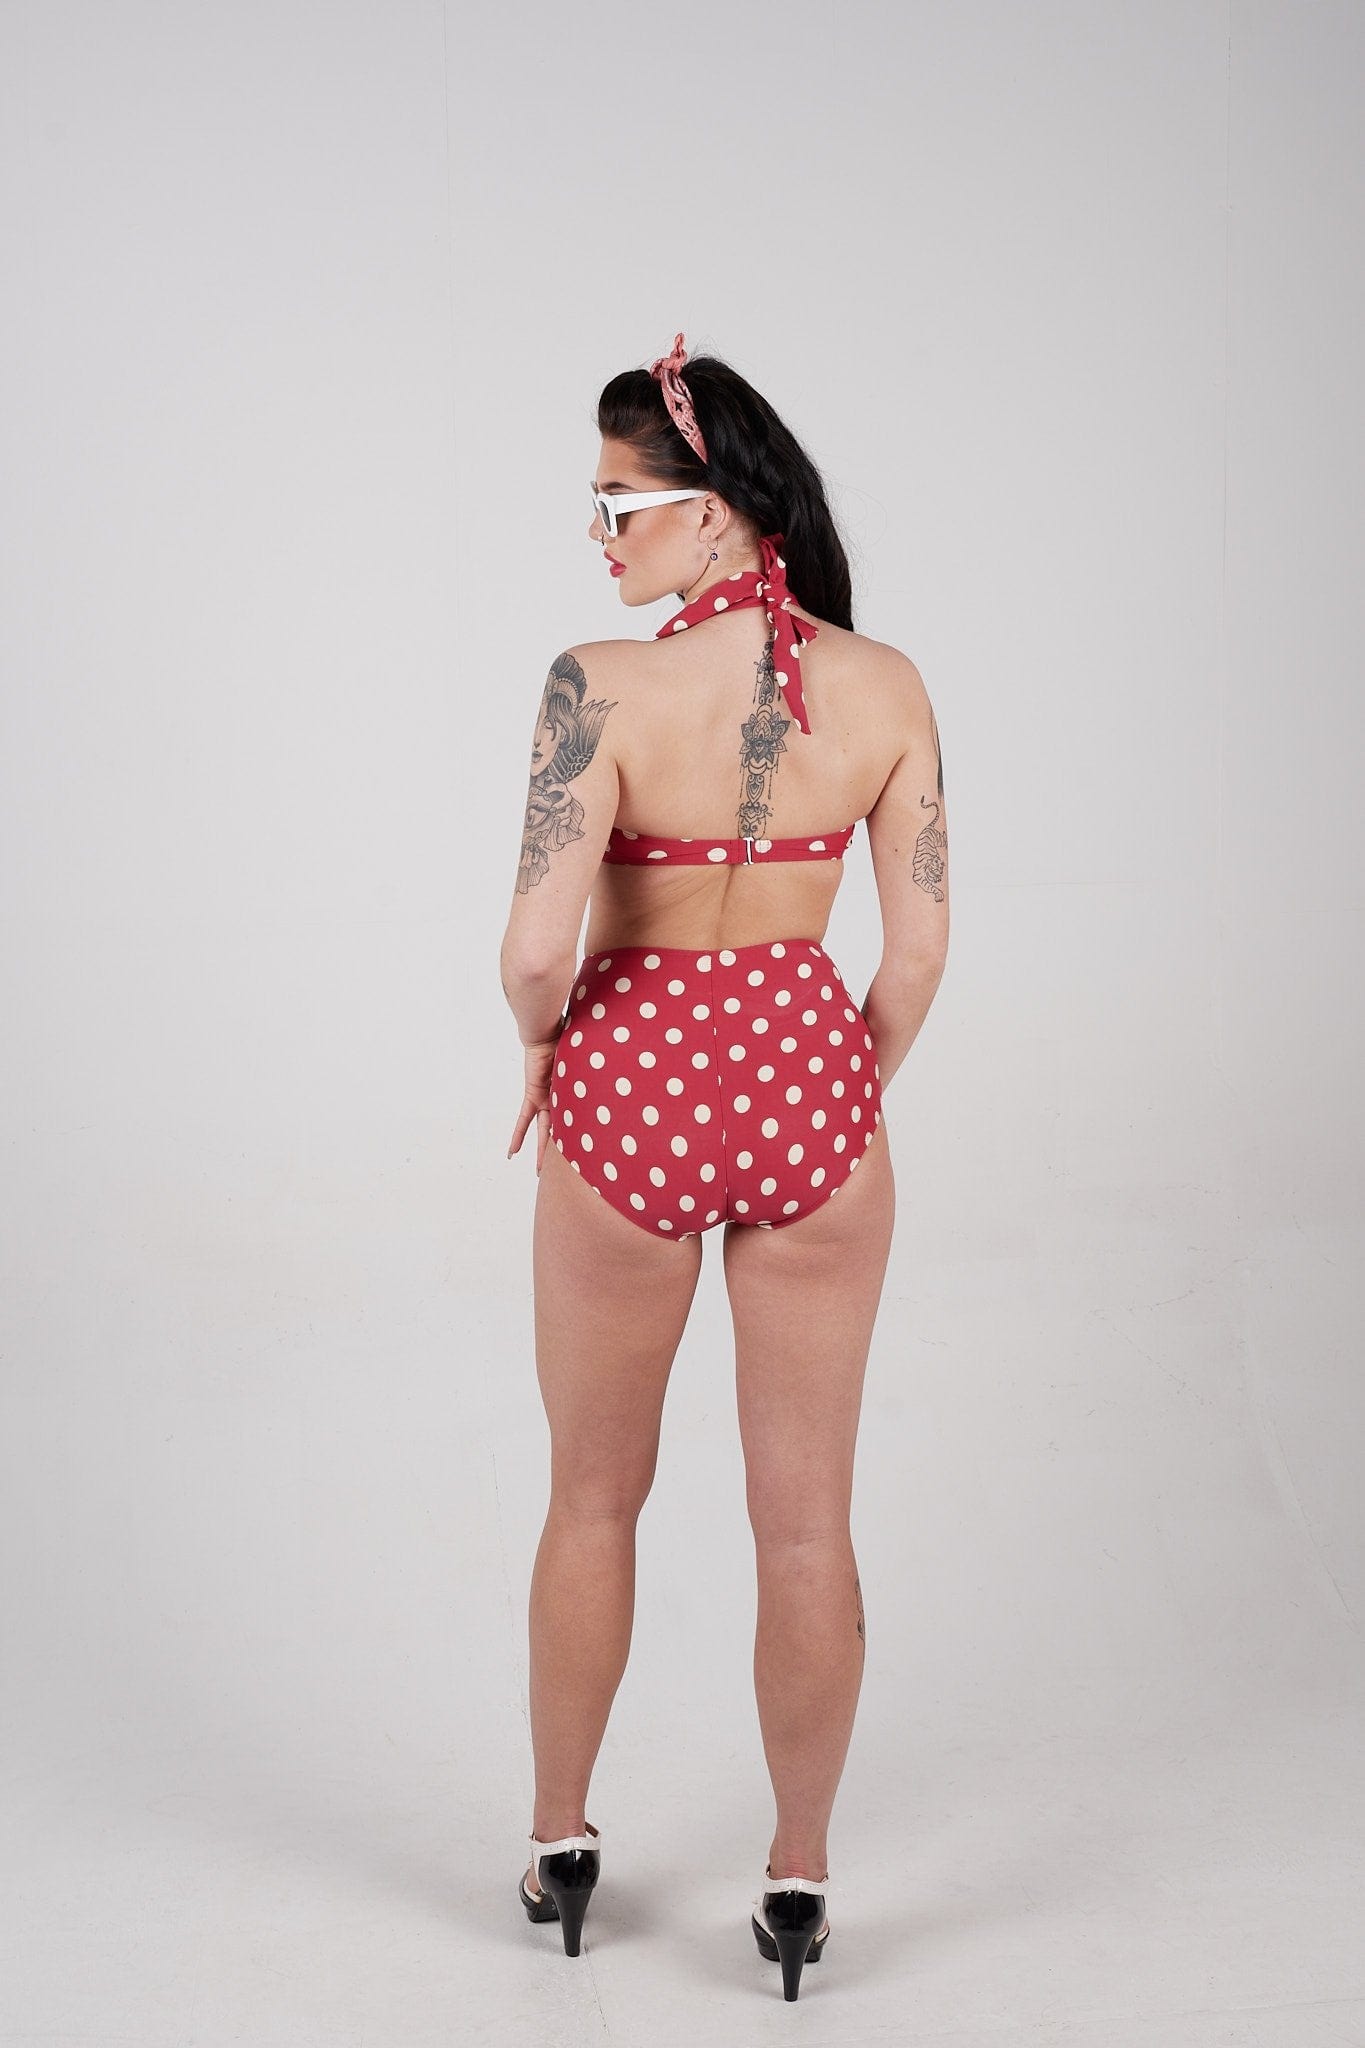 BettyliciousUK Bikini Top Esther Williams Red Polka Dot Retro Vintage Halterneck Bikini Top